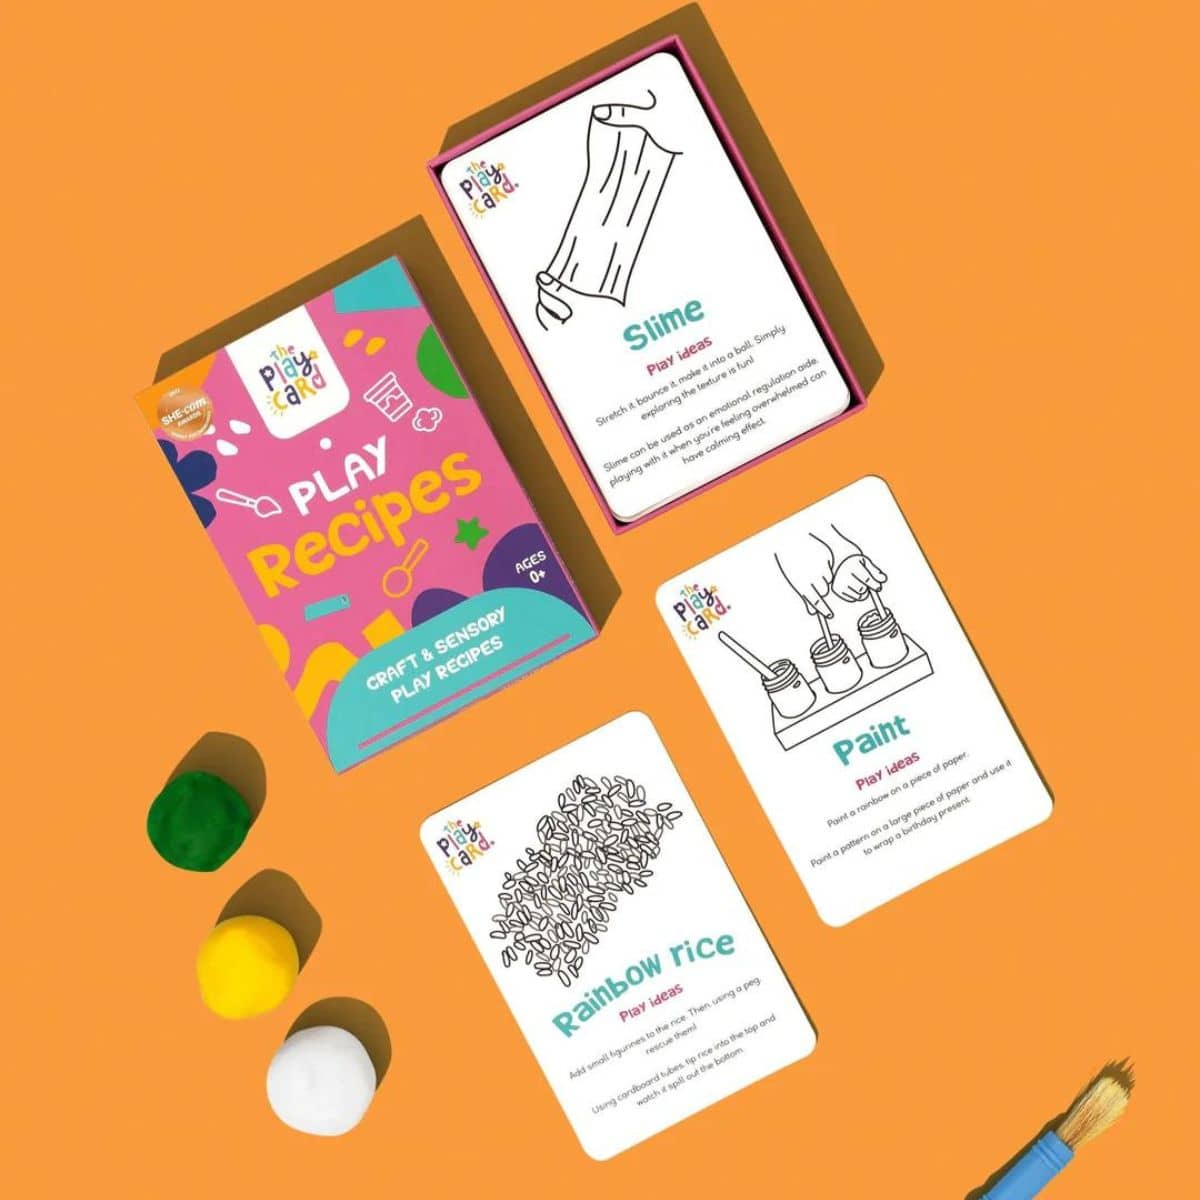 The Play Card Co - Play Cards - Sensory Play Recipes